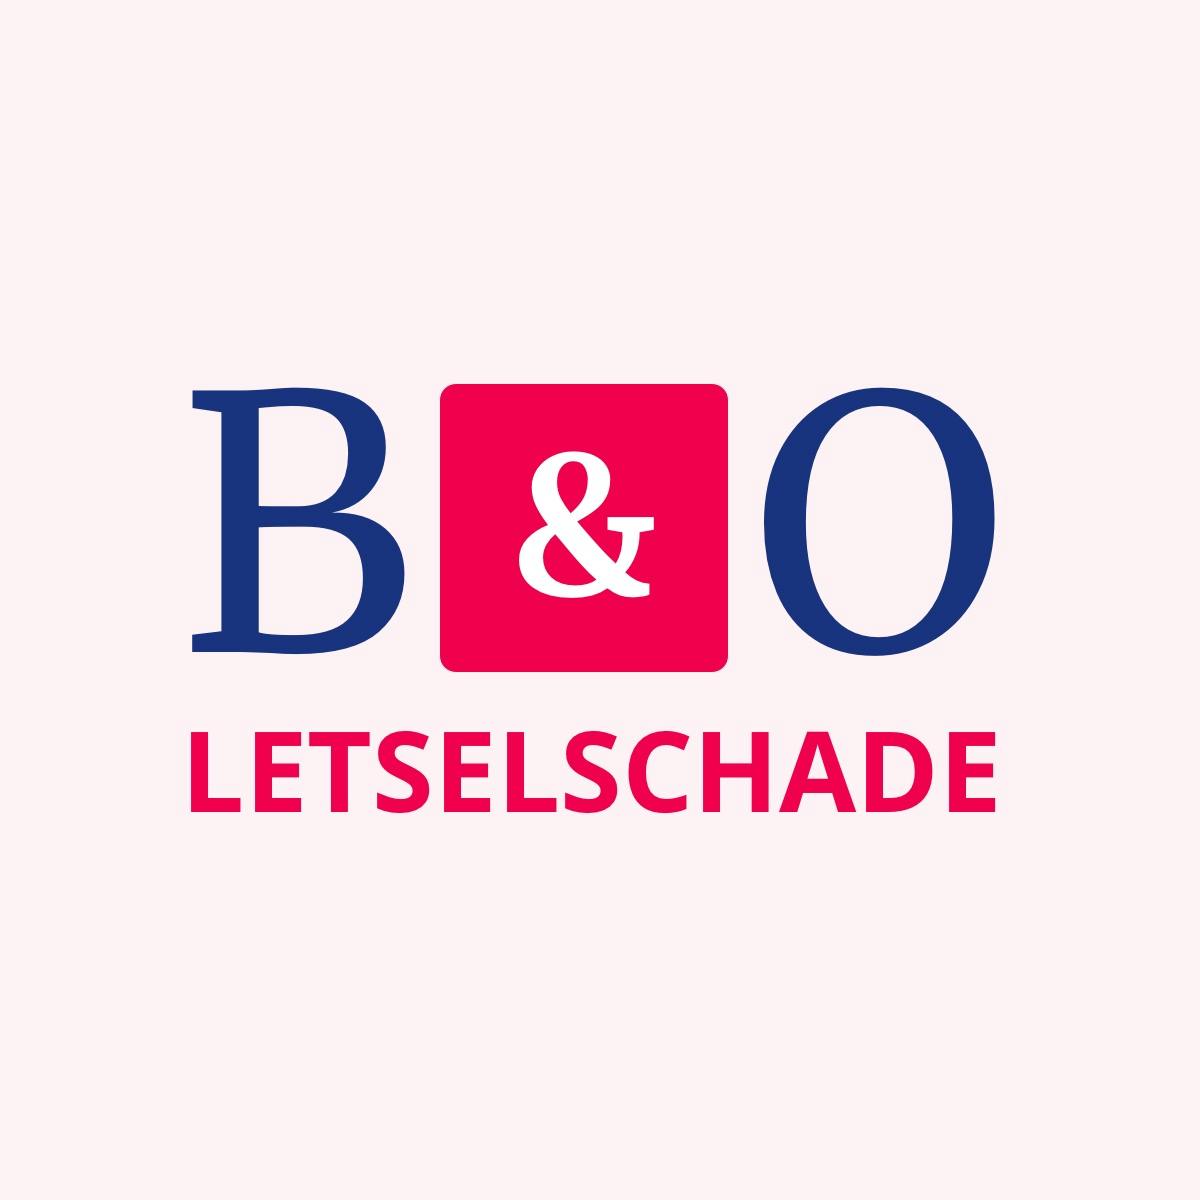 B&O Leselschade